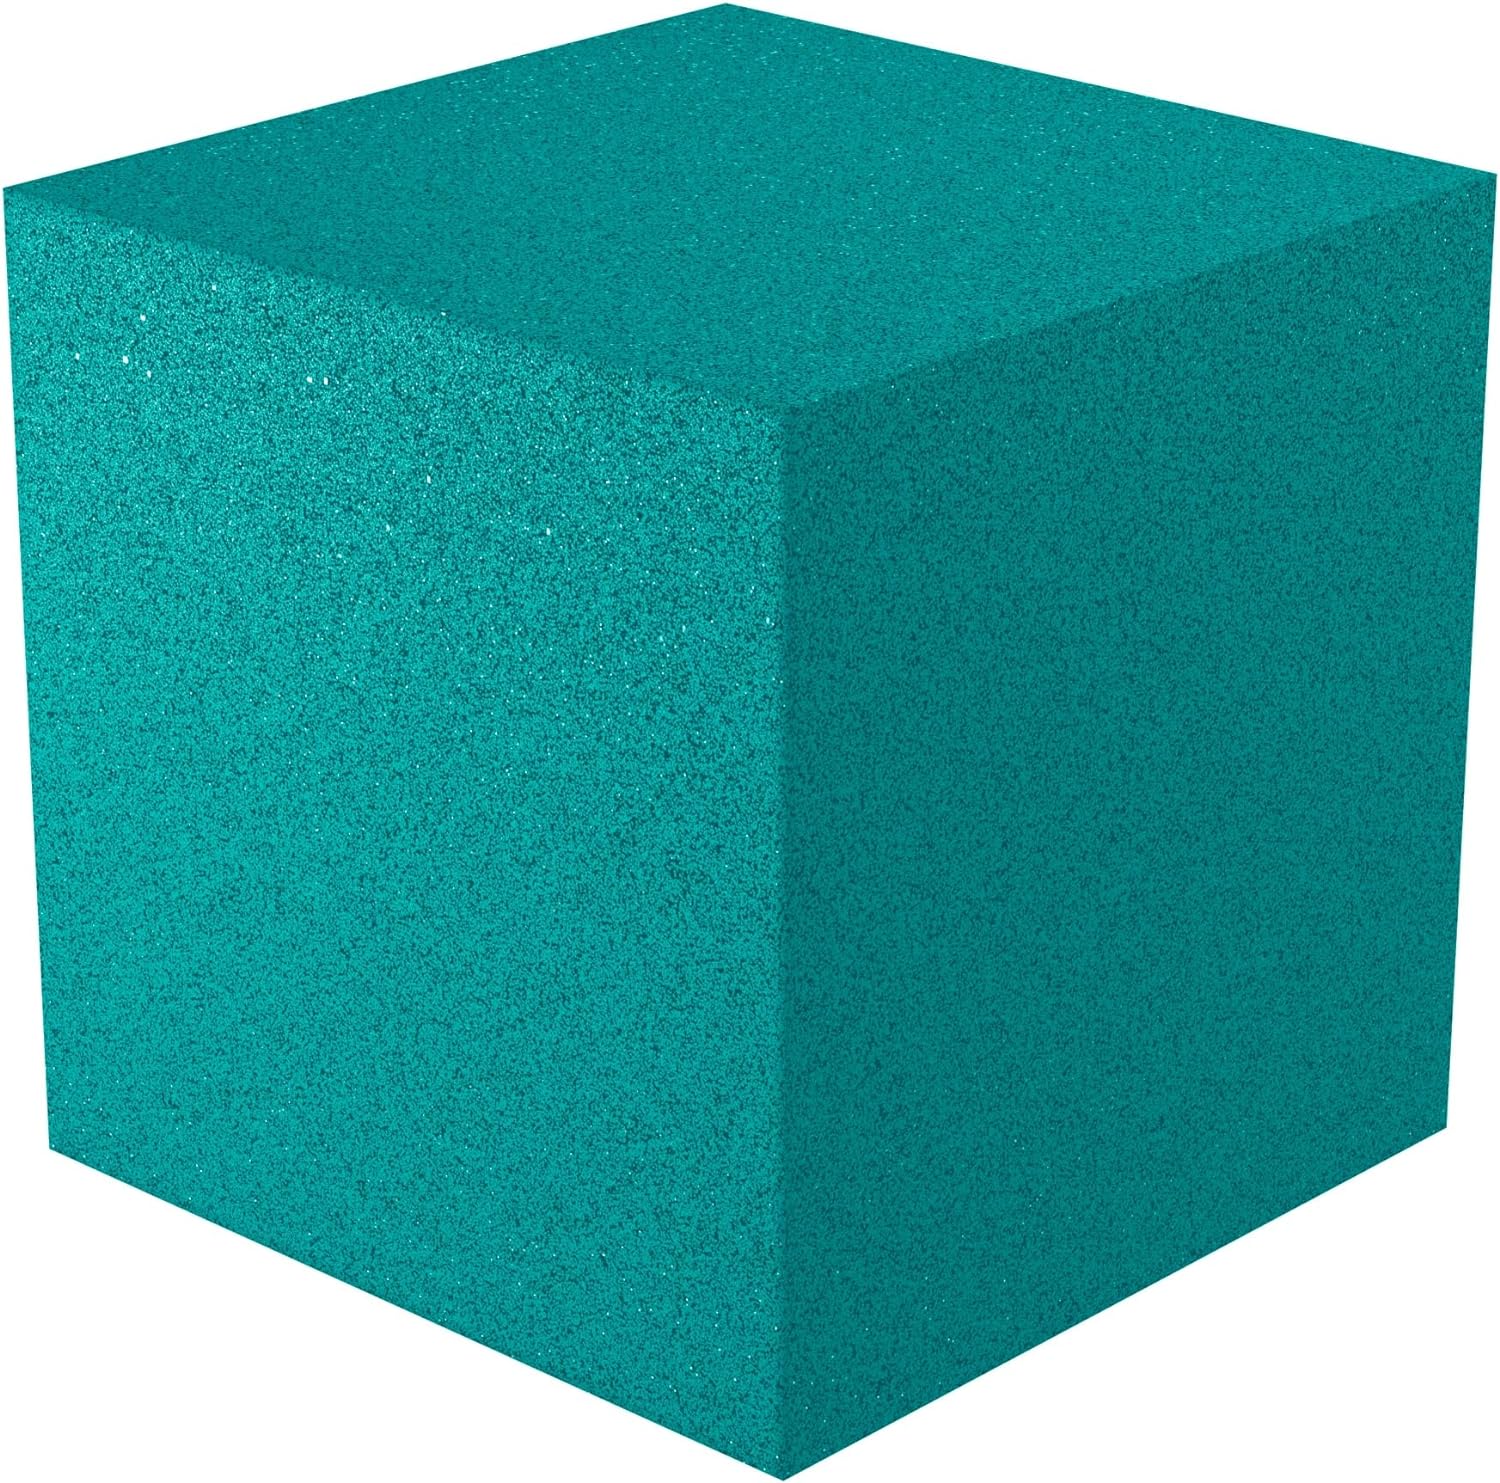 12x12x12 acoustic foam corner block - teal foam square